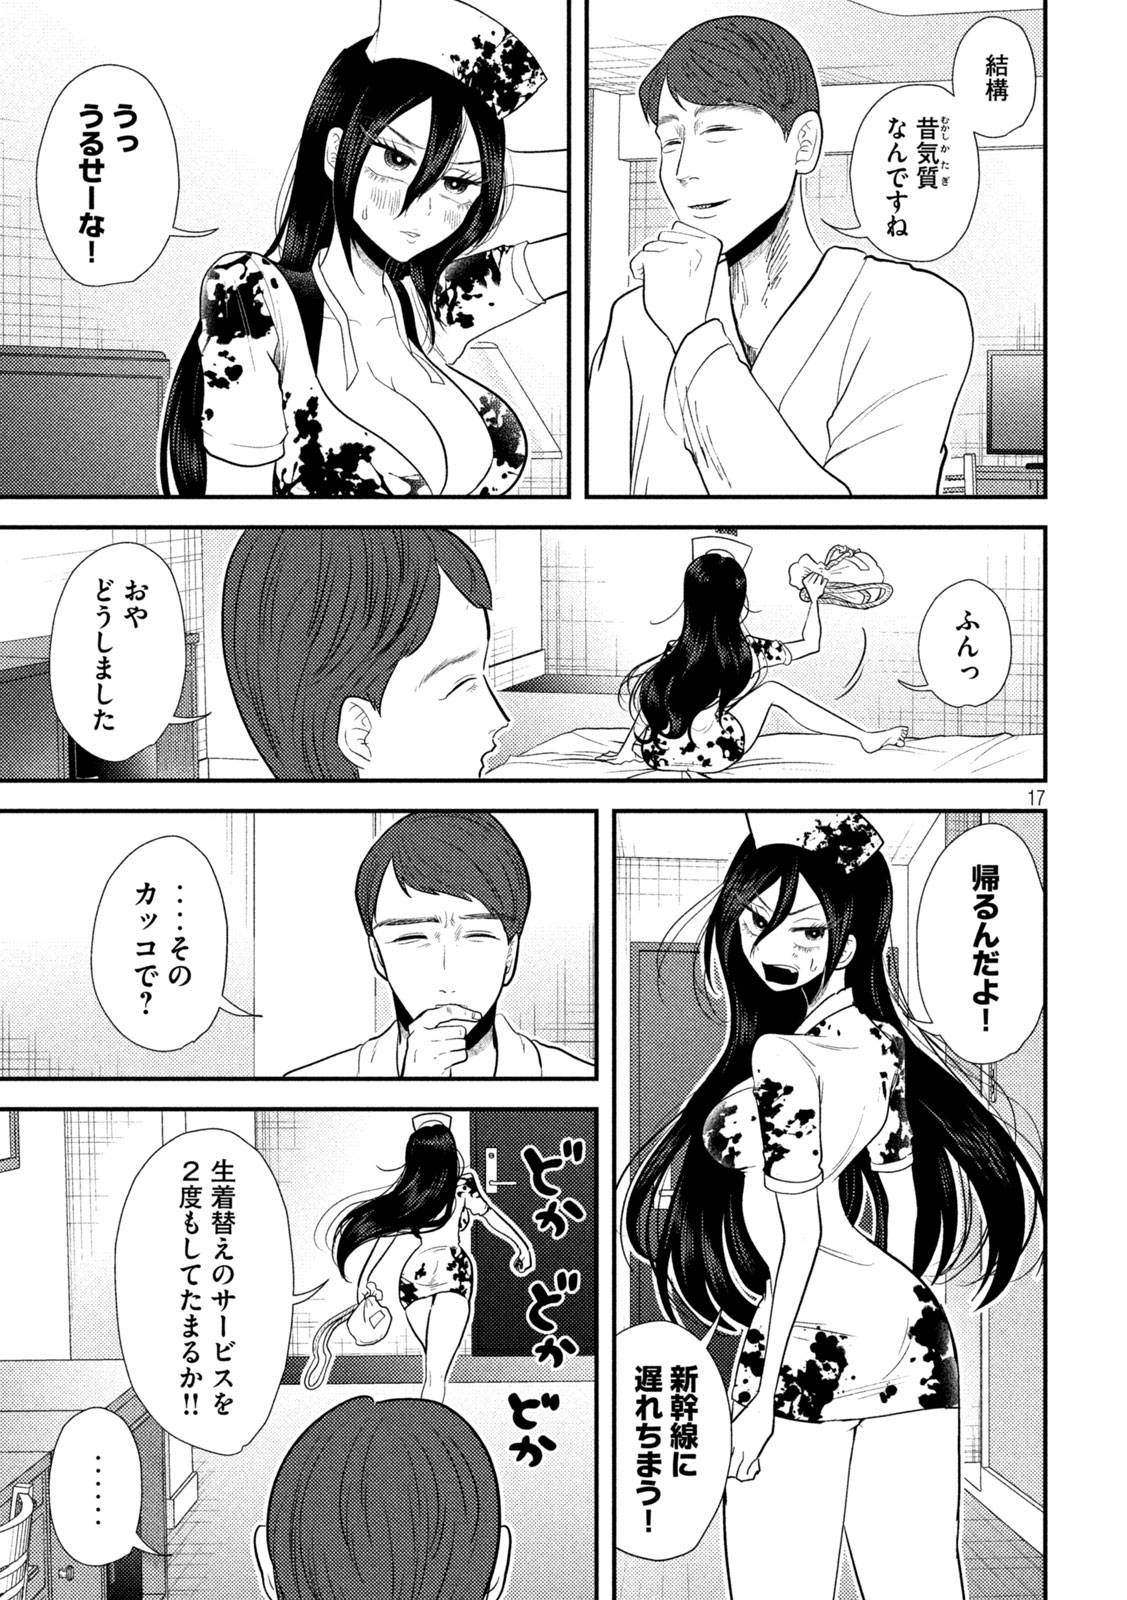 Heisei Haizanhei Sumire-chan - Chapter 25 - Page 17